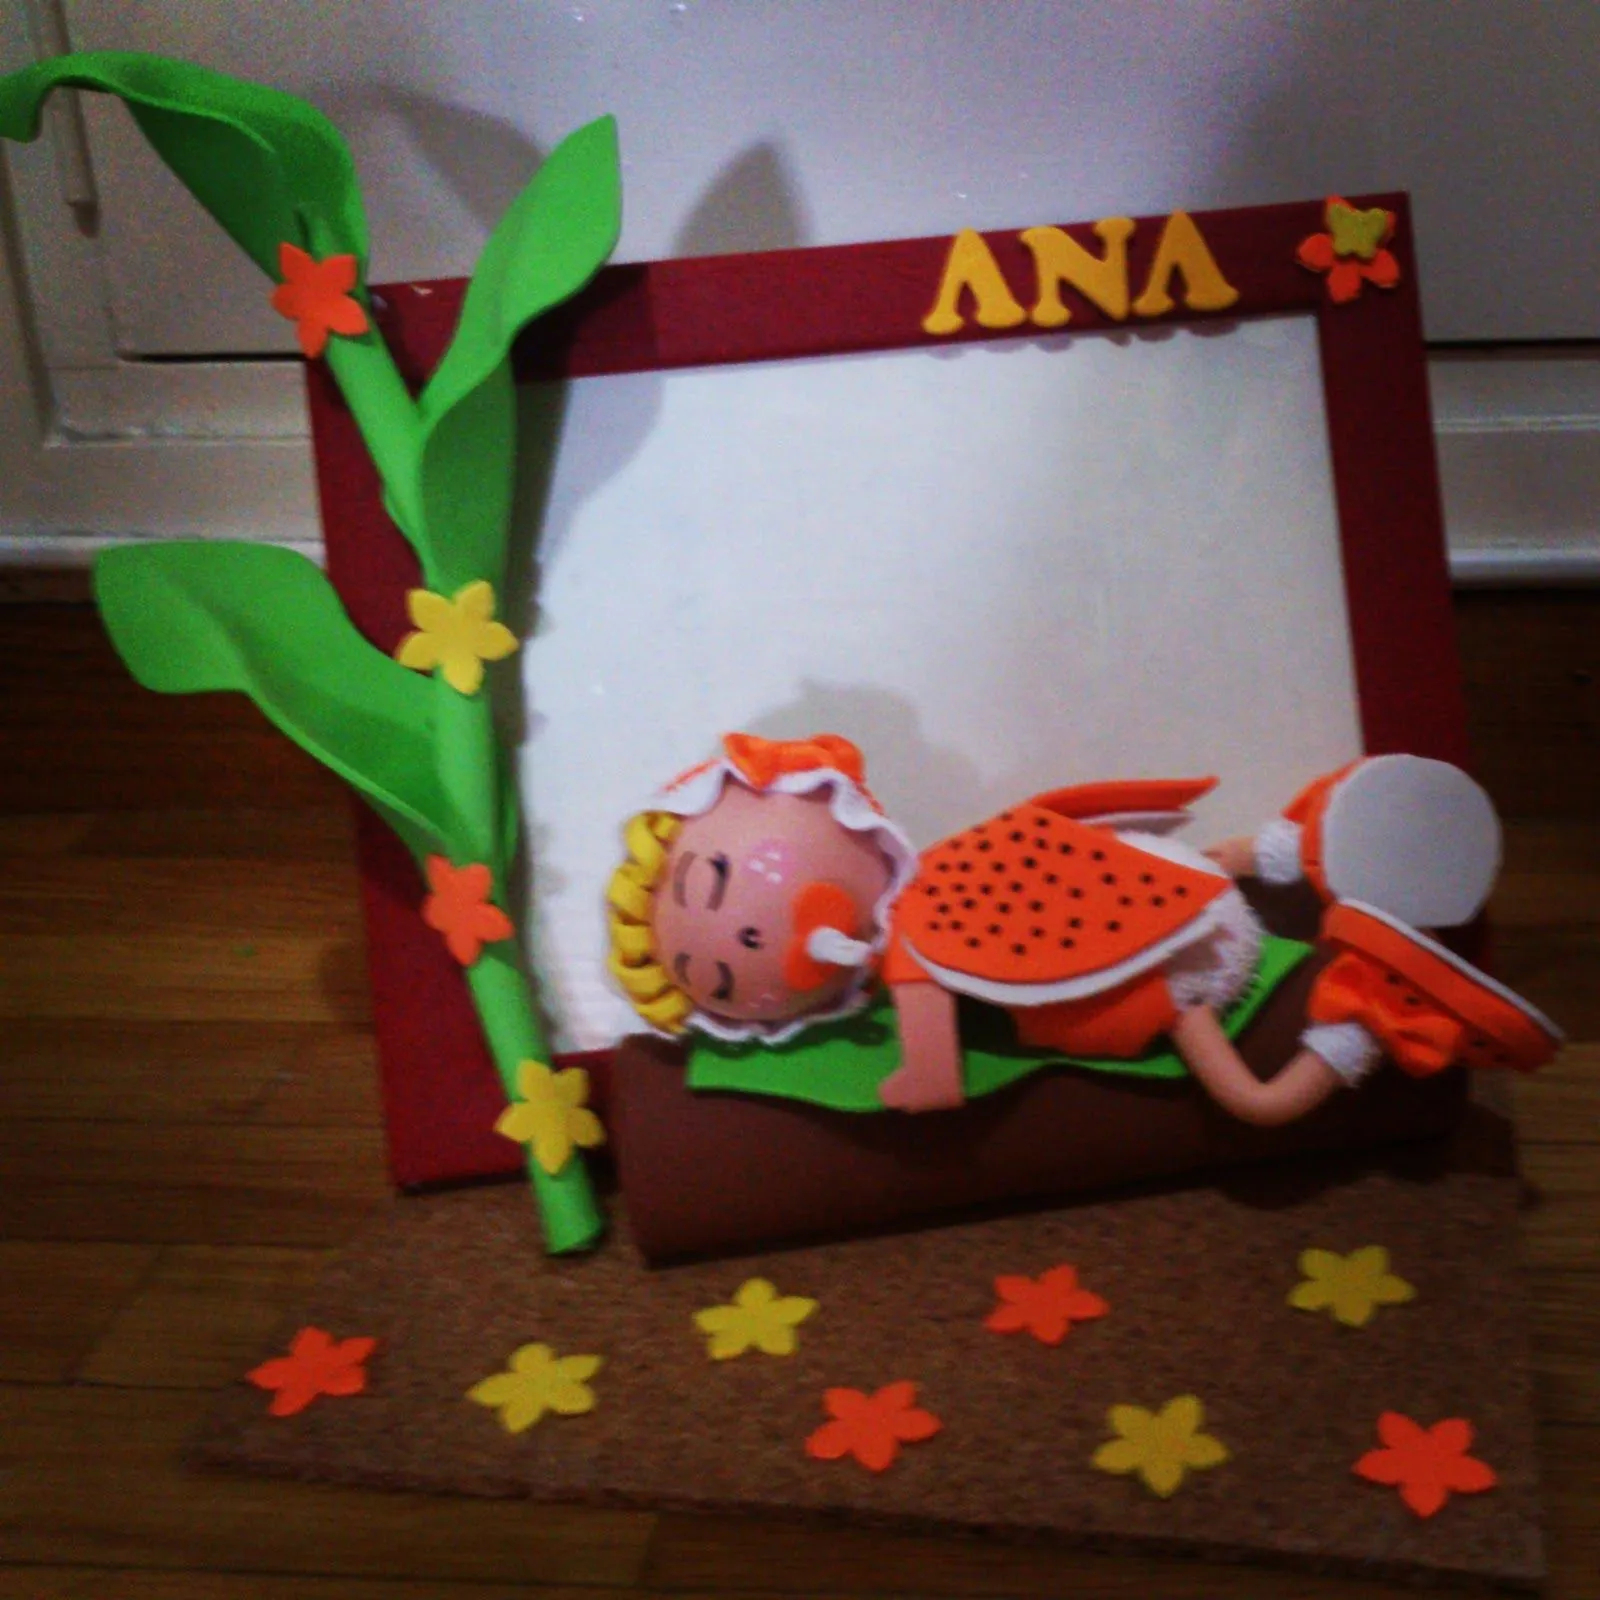 Manicura de Fantasia: Fofucha bebé con marco de fotos!!